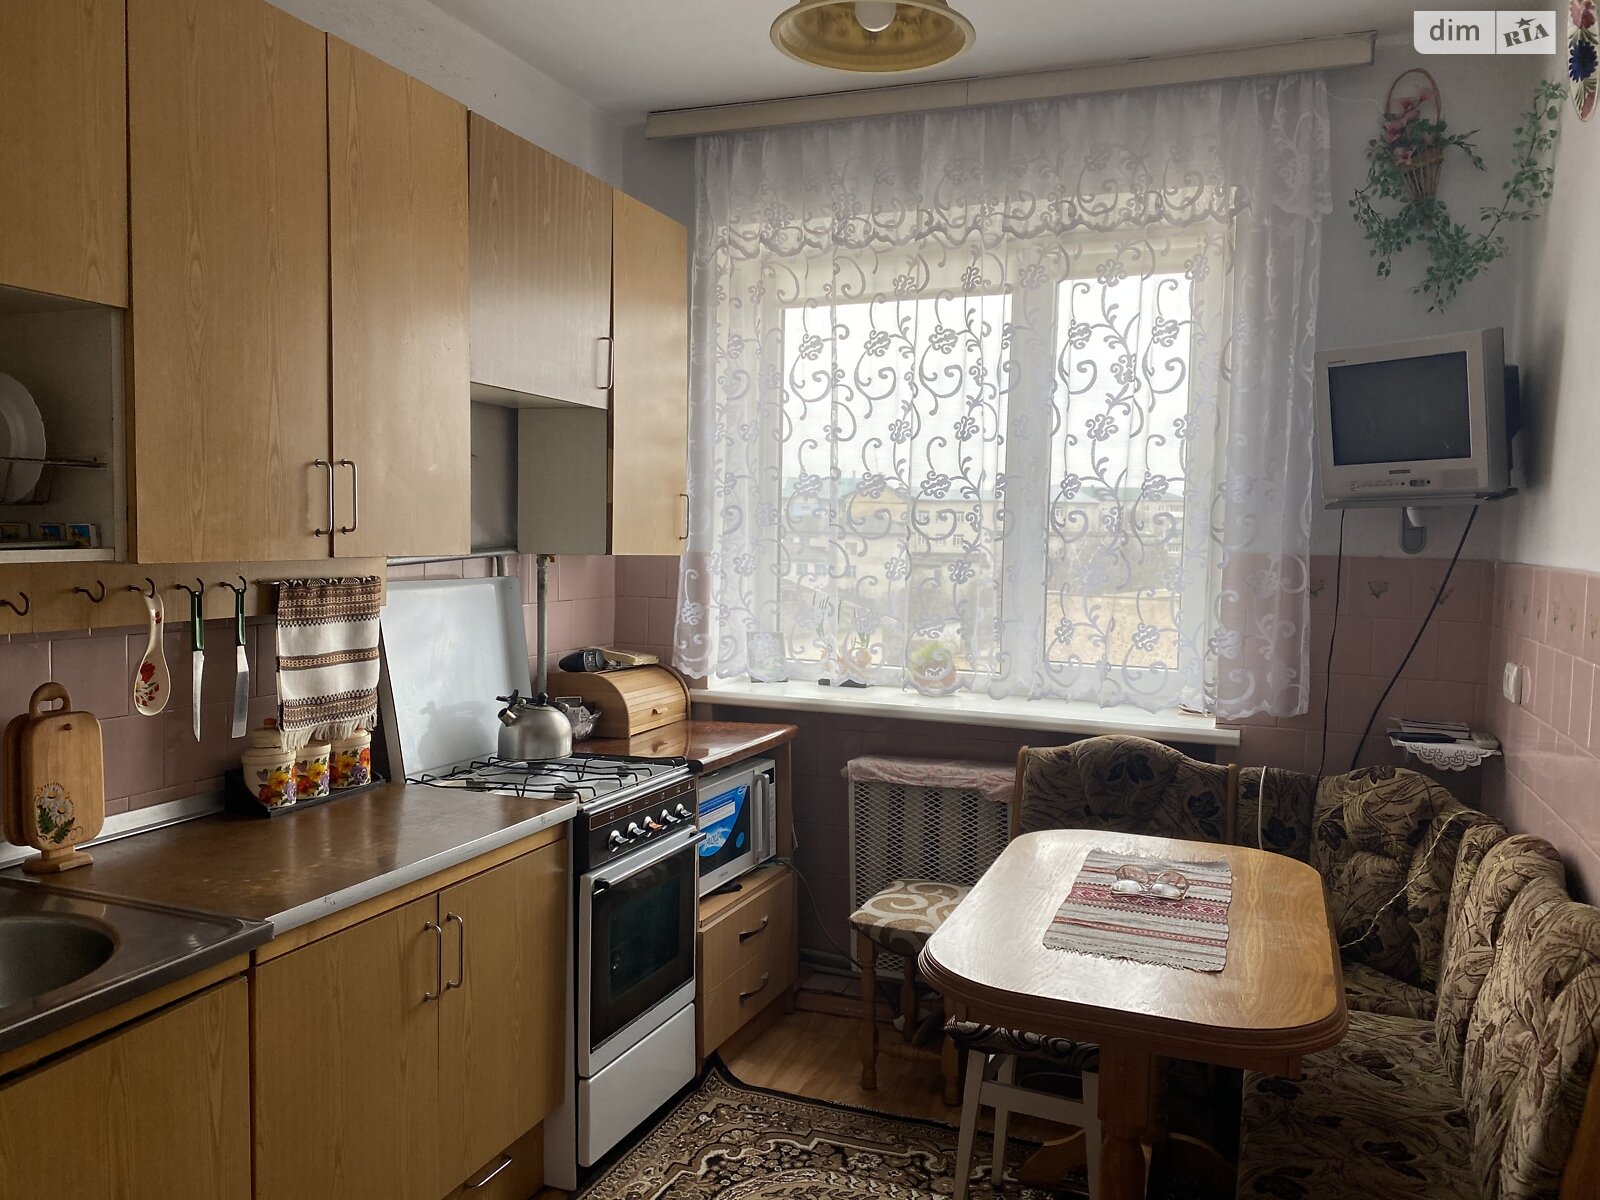 Продажа трехкомнатной квартиры в Борщеве, на ул. Степана Бандеры, район Борщев фото 1